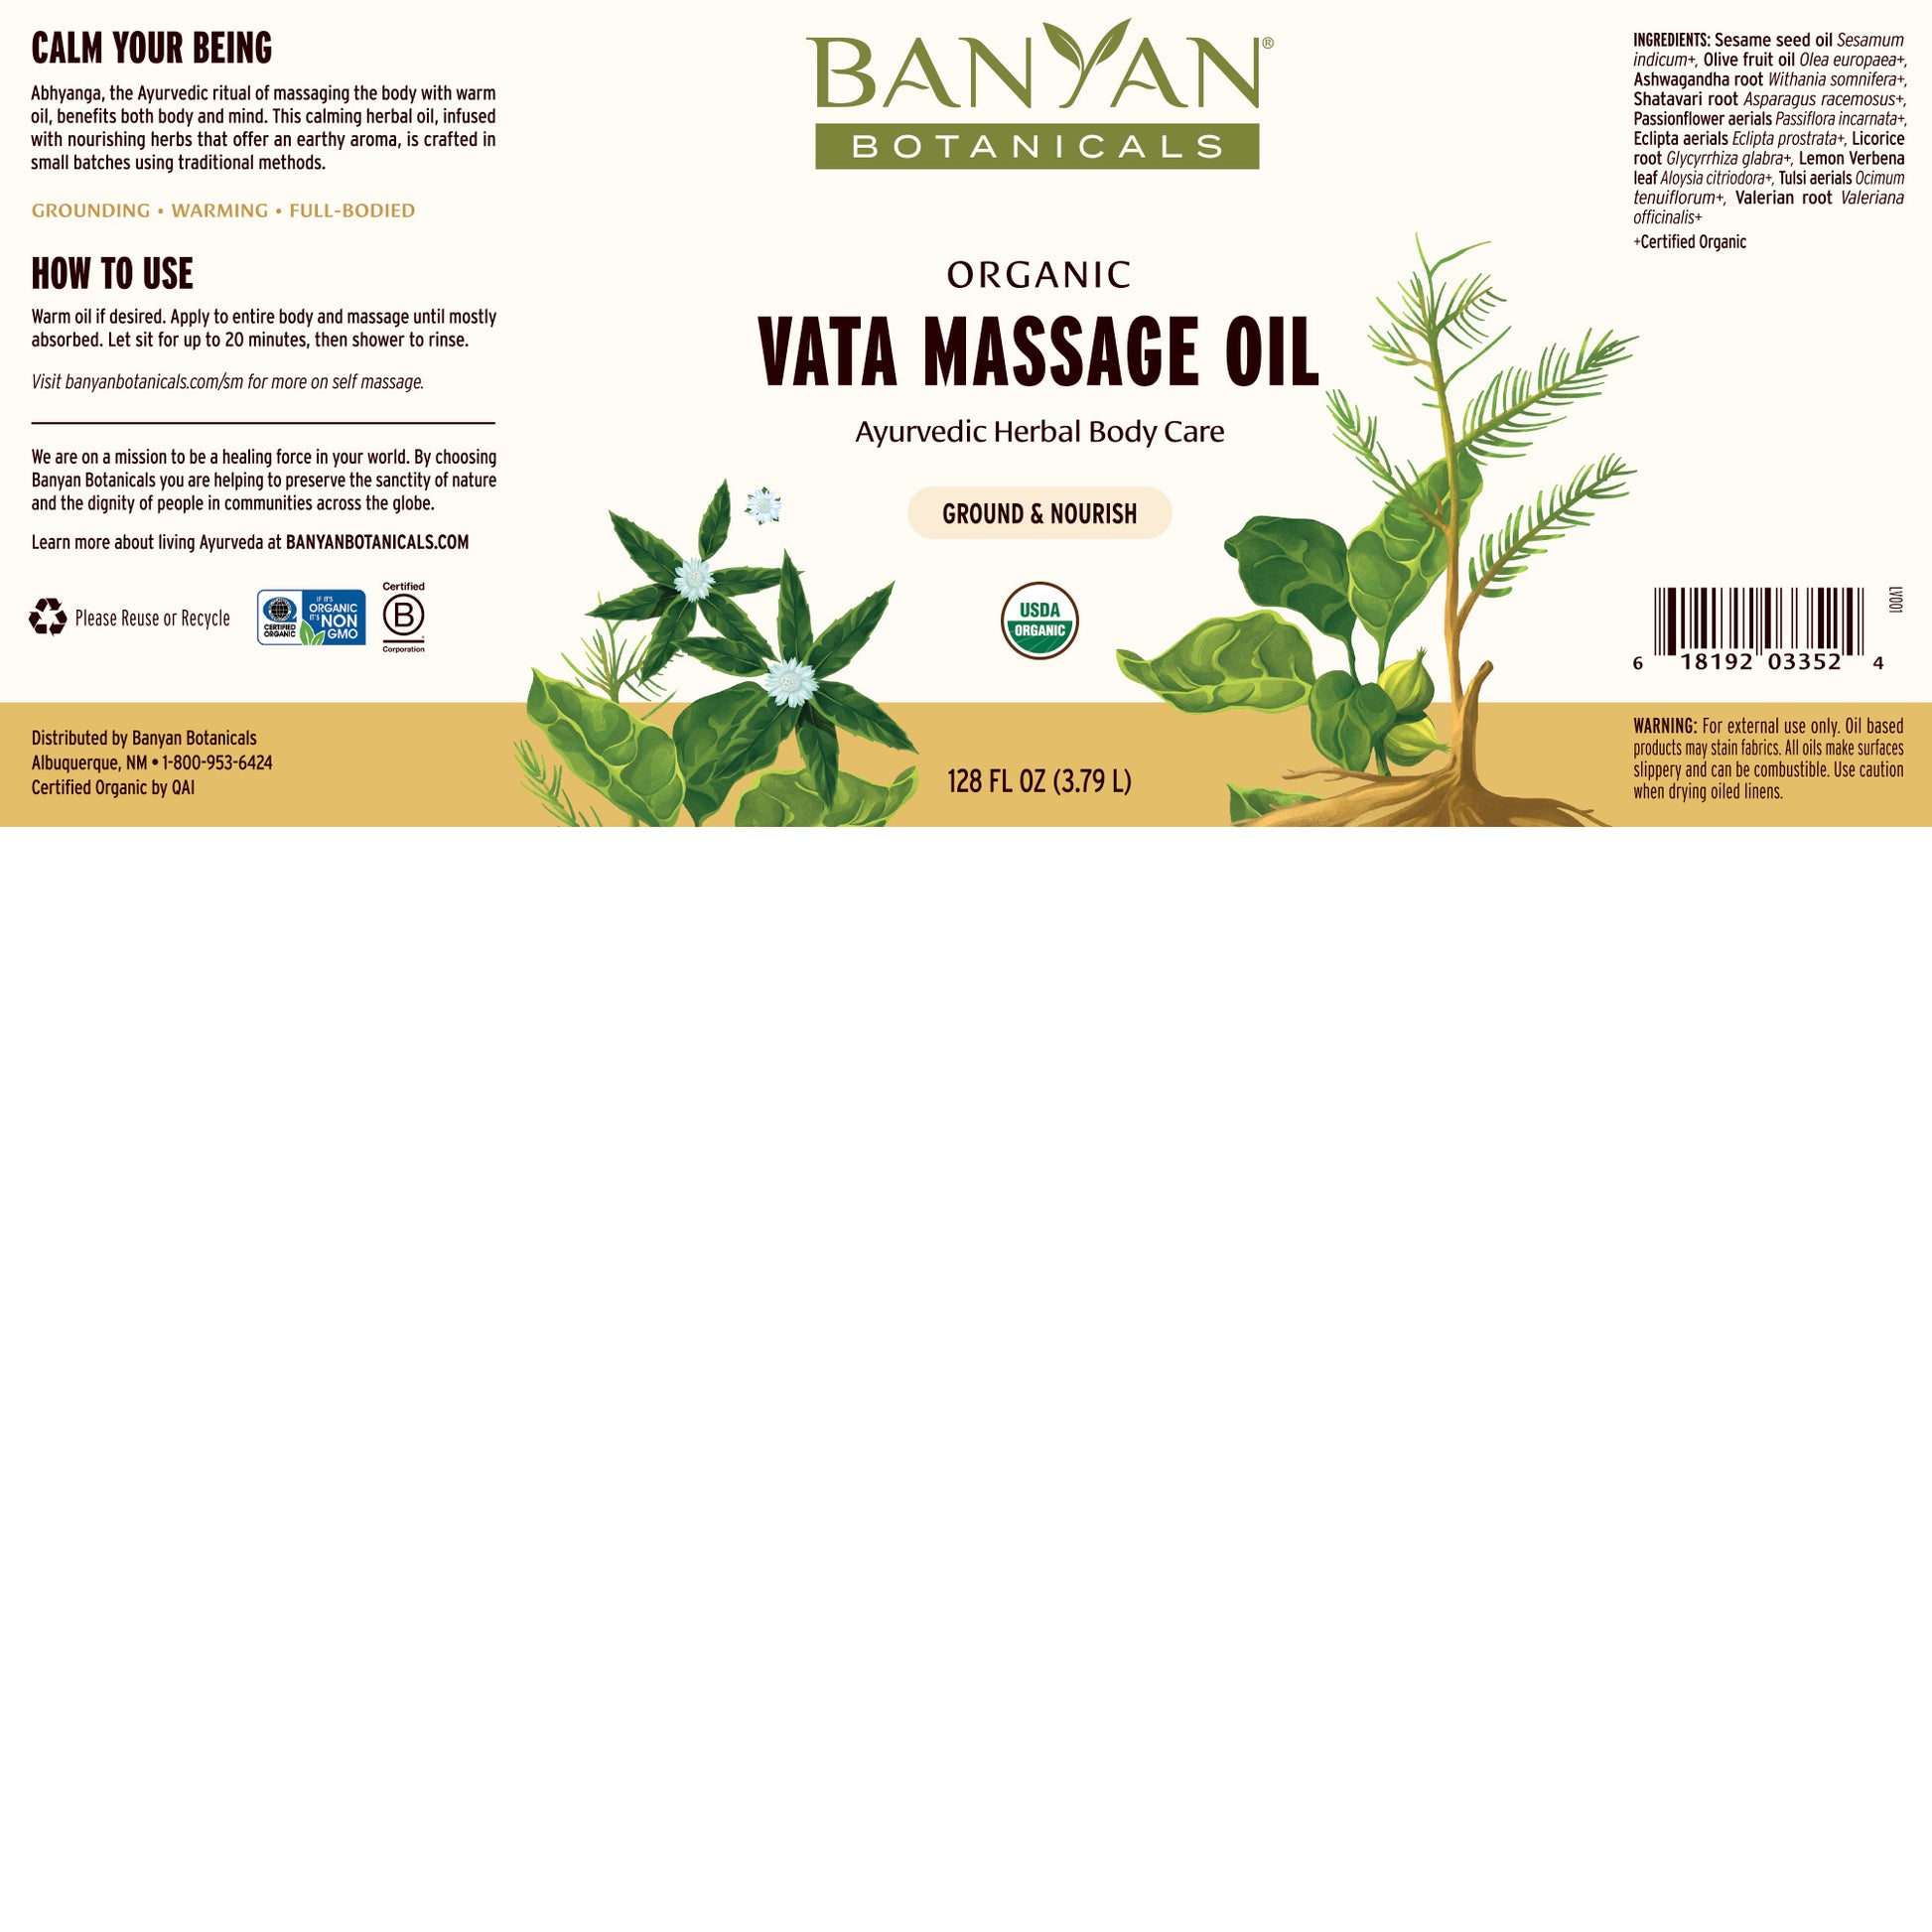 128 fl oz: Vata Massage Oil supplement facts label